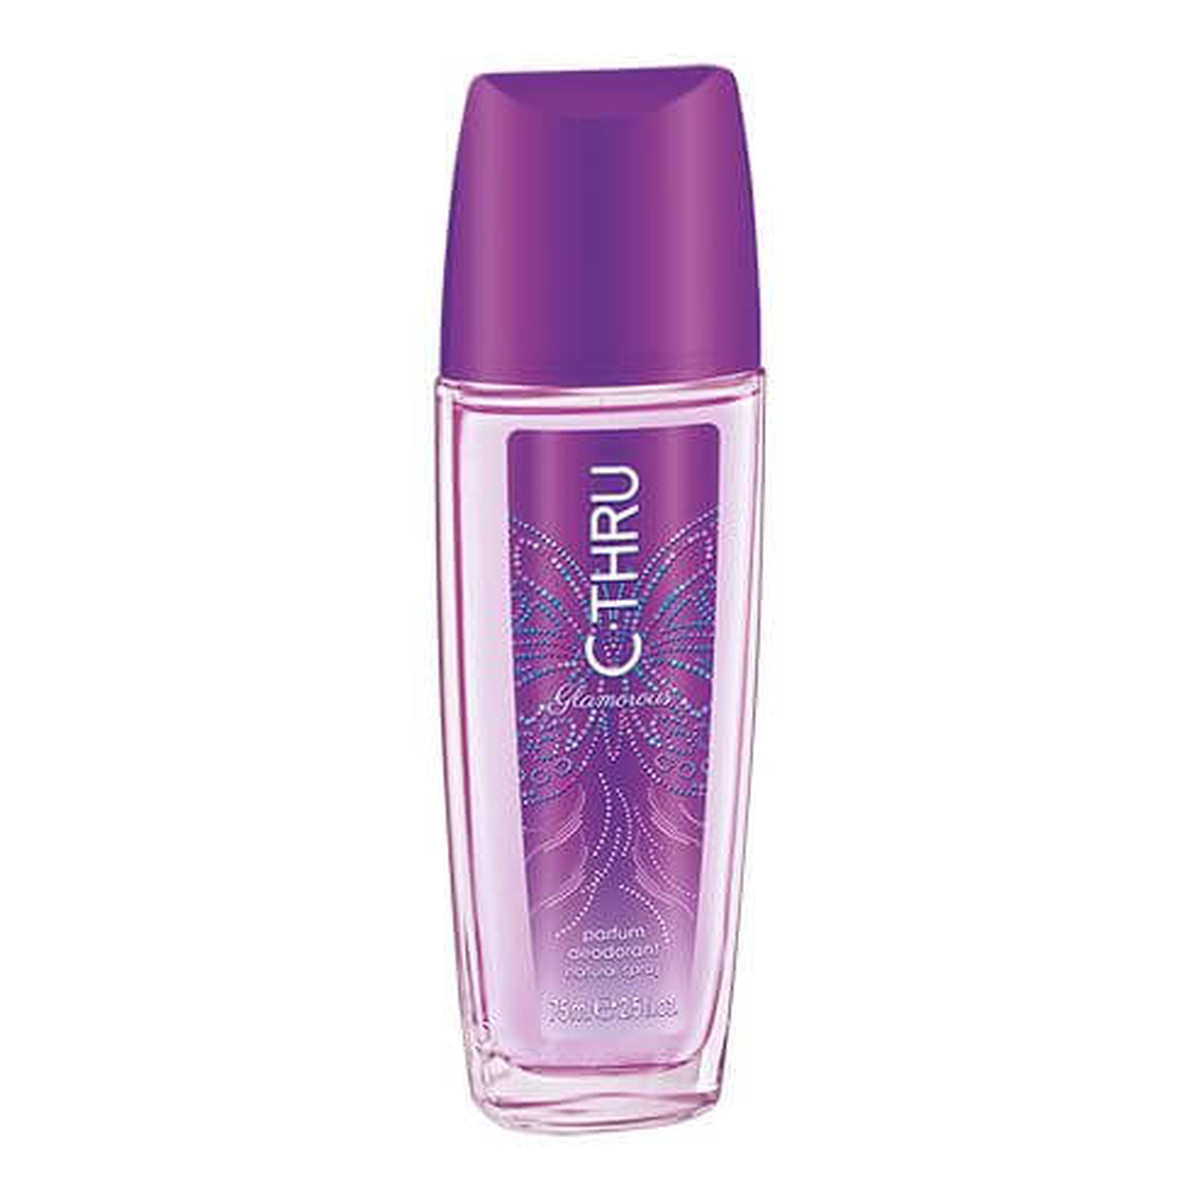 C-Thru Glamorous Dezodorant natural spray 75ml